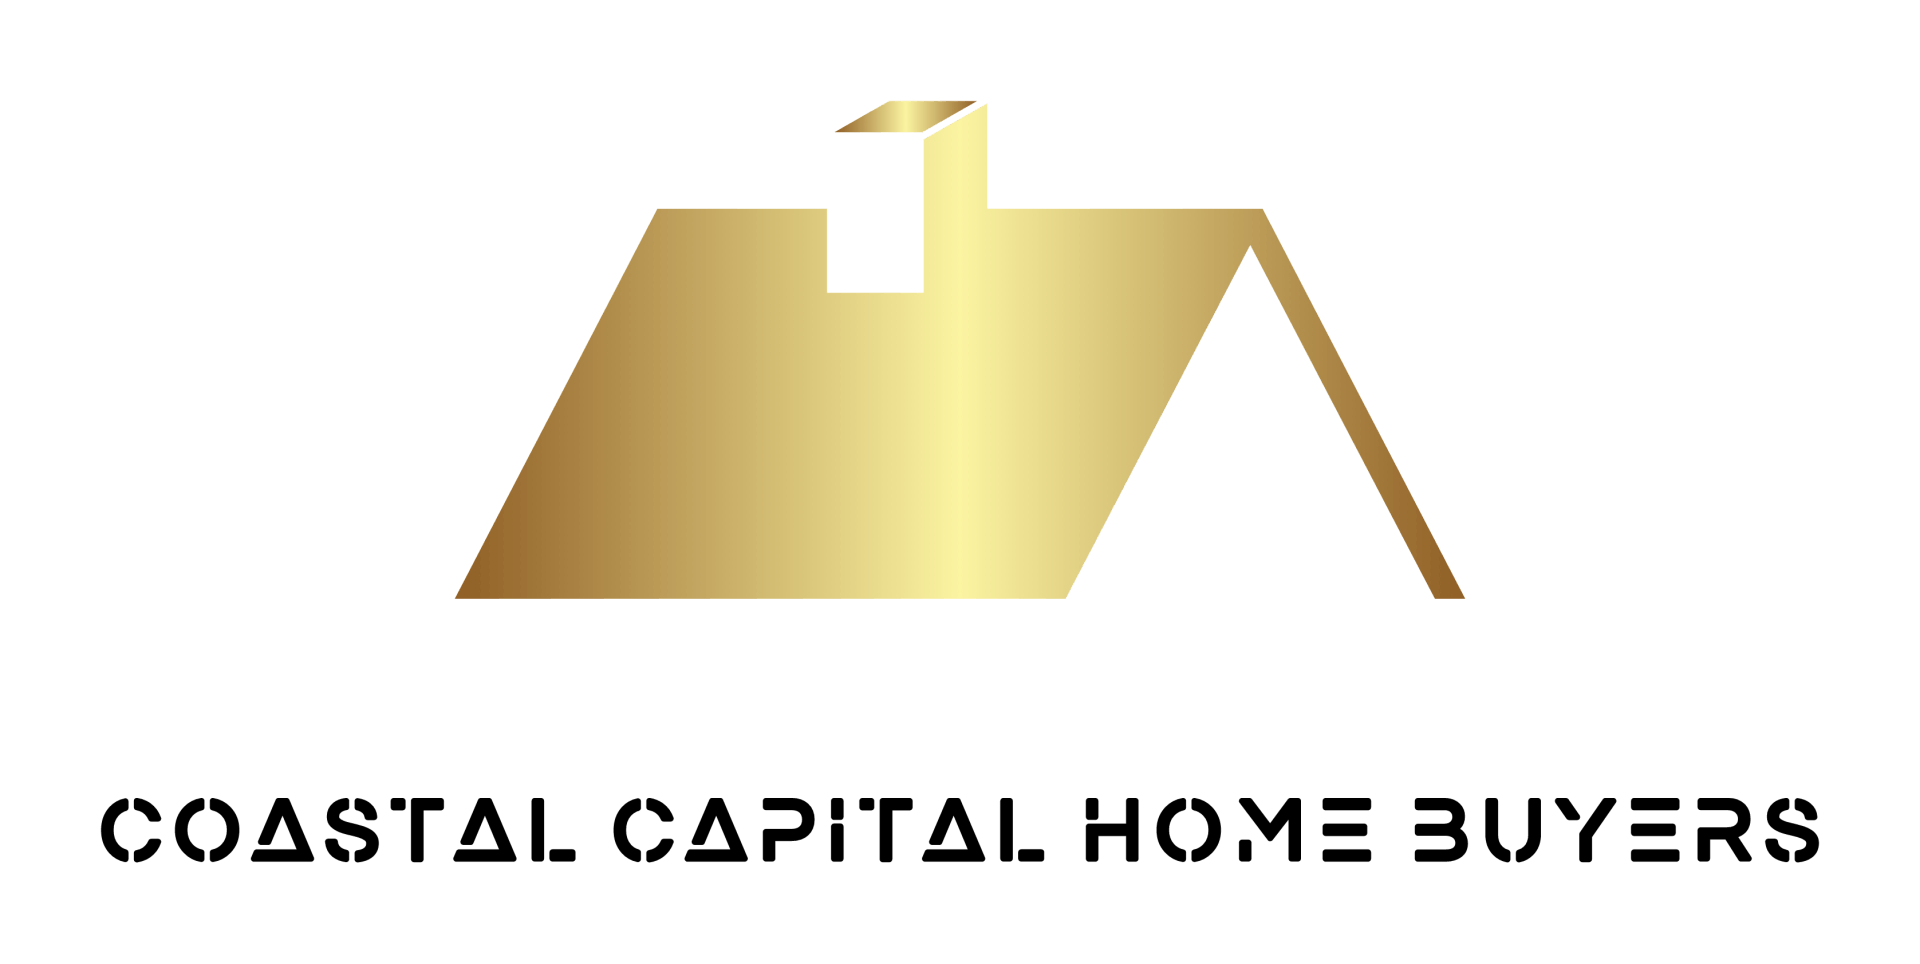 Coastal Capital Home Buyers Expands into Ohio with a New Brand, I Buy Ohio